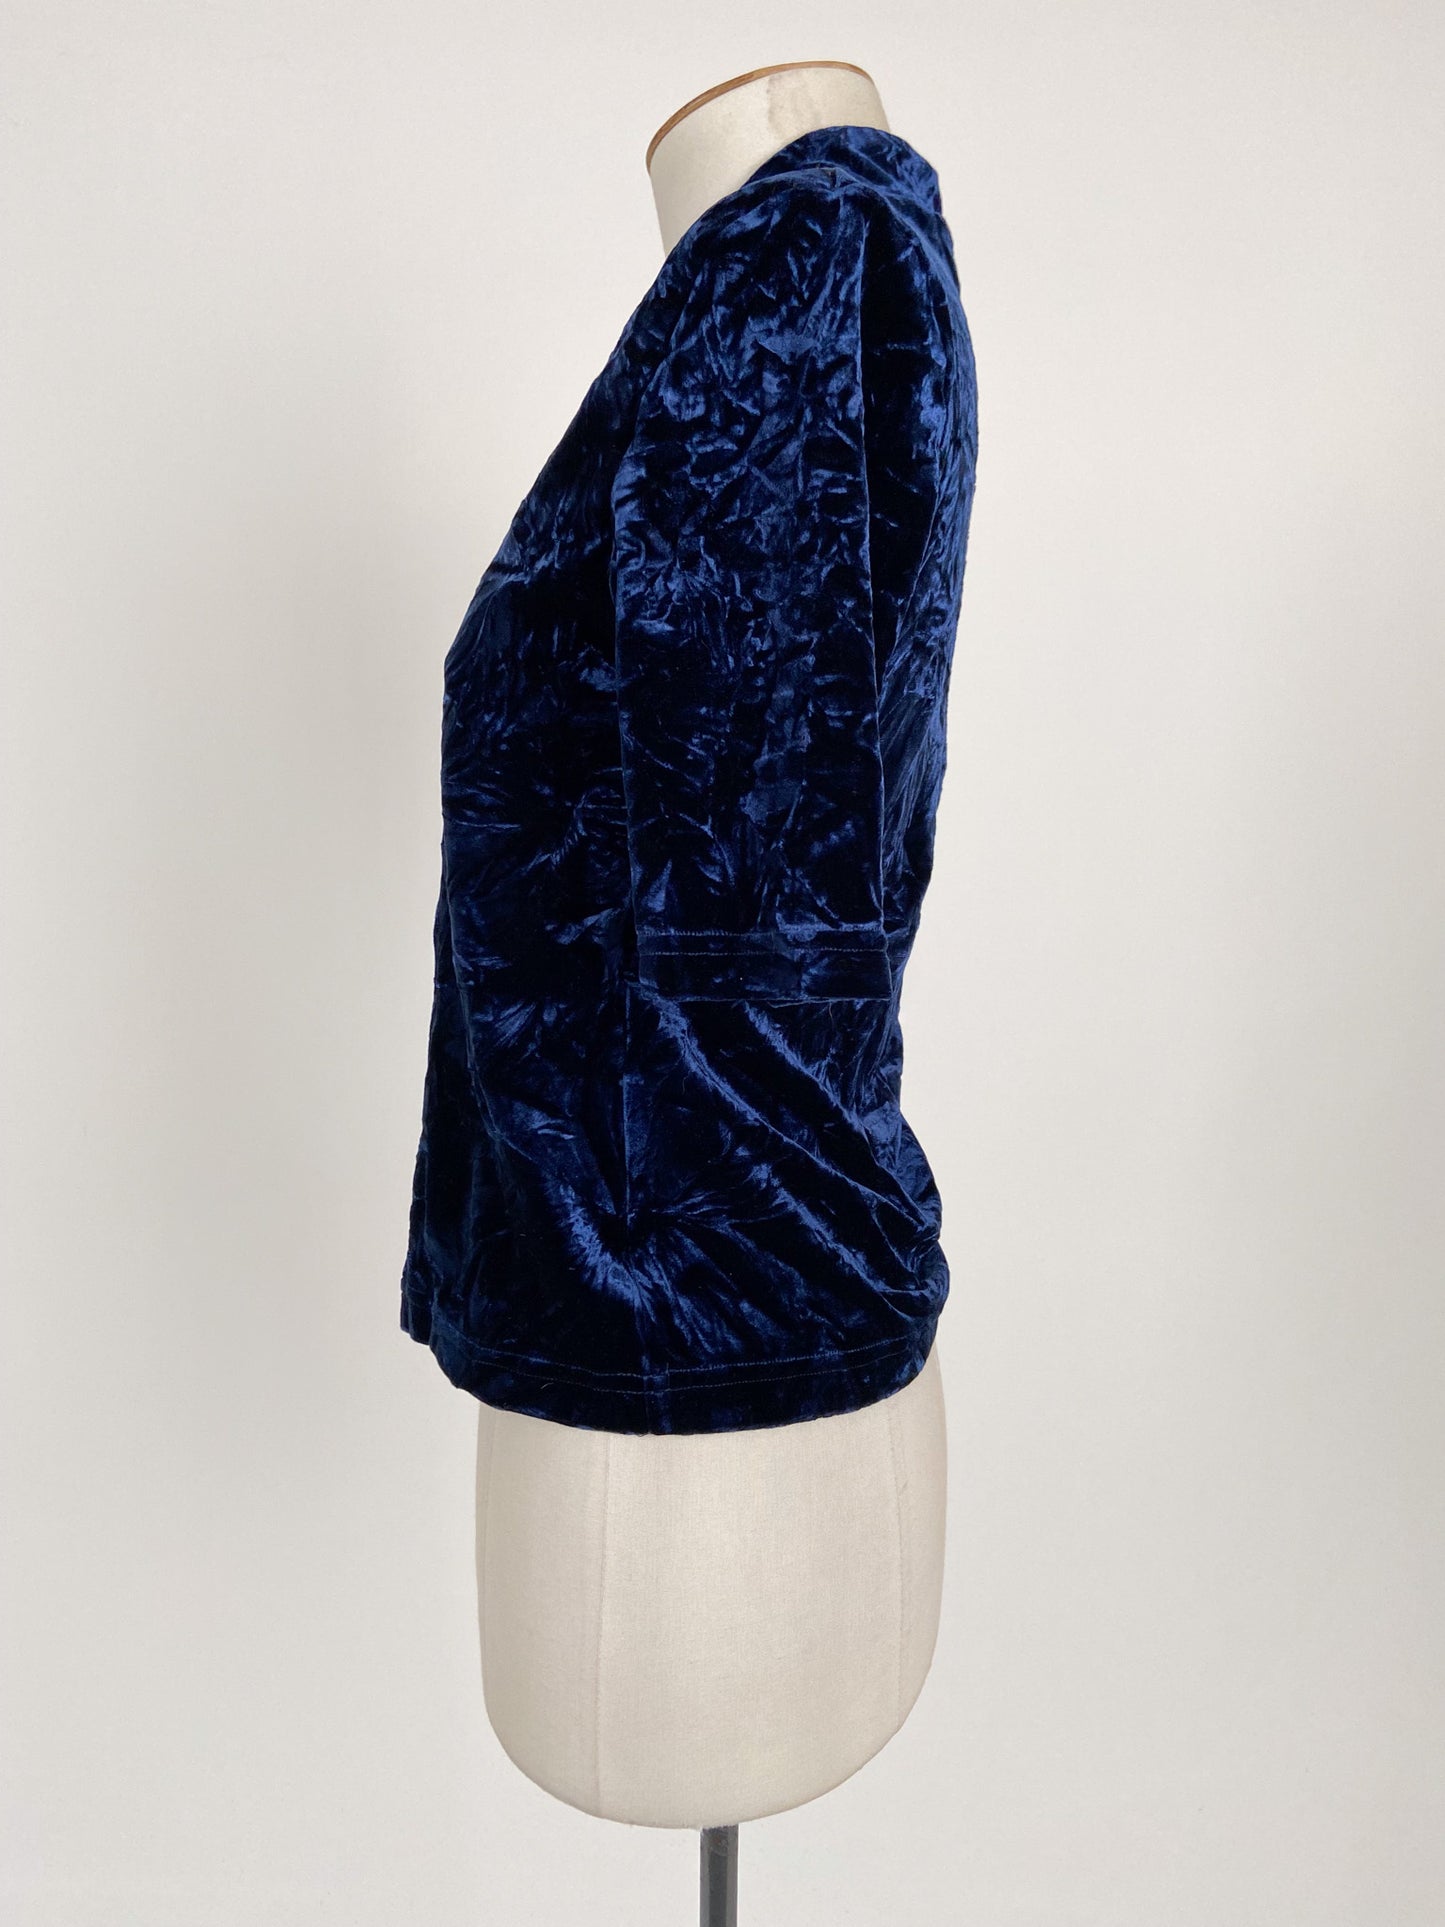 Annah Stretton | Blue Workwear Top | Size S